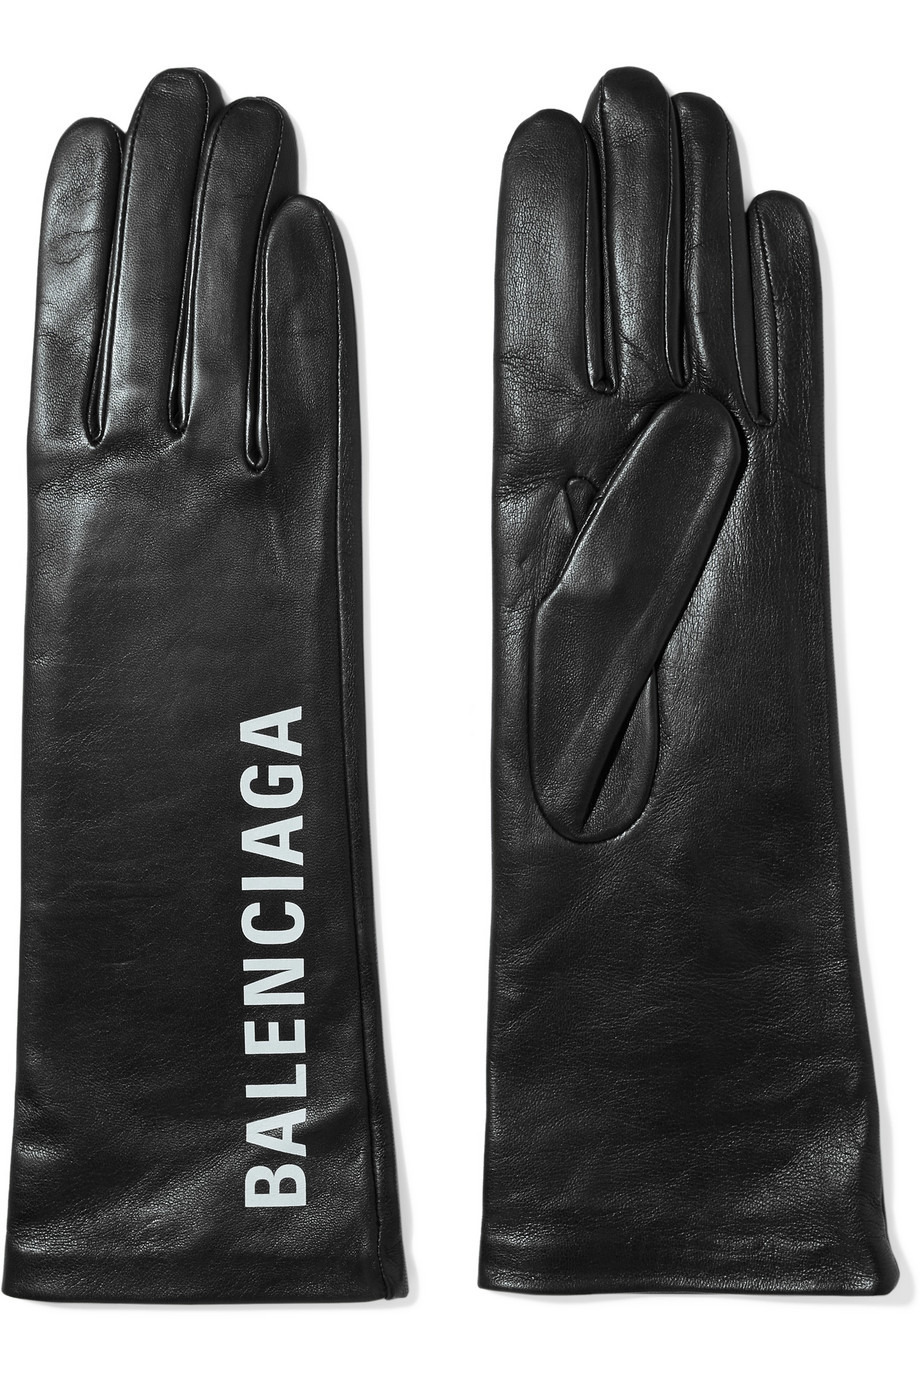 Перчатки хамелеон. Перчатки Баленсиага. Топ перчатки Баленсиага. Длинные перчатки Баленсиага. Balenciaga Gloves.